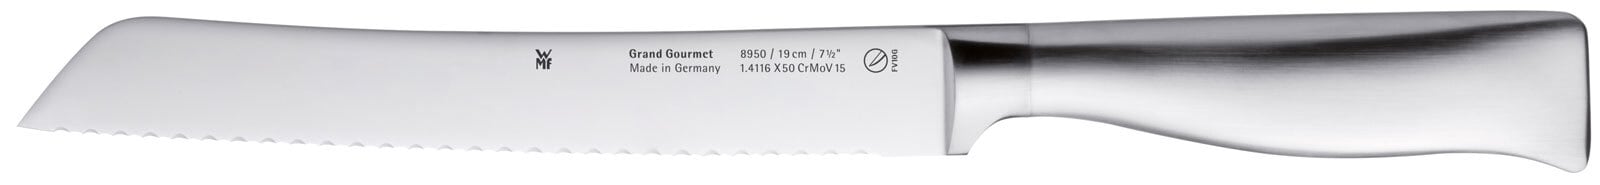 WMF Brotmesser GRAND GOURMET Edelstahl silberfarbig